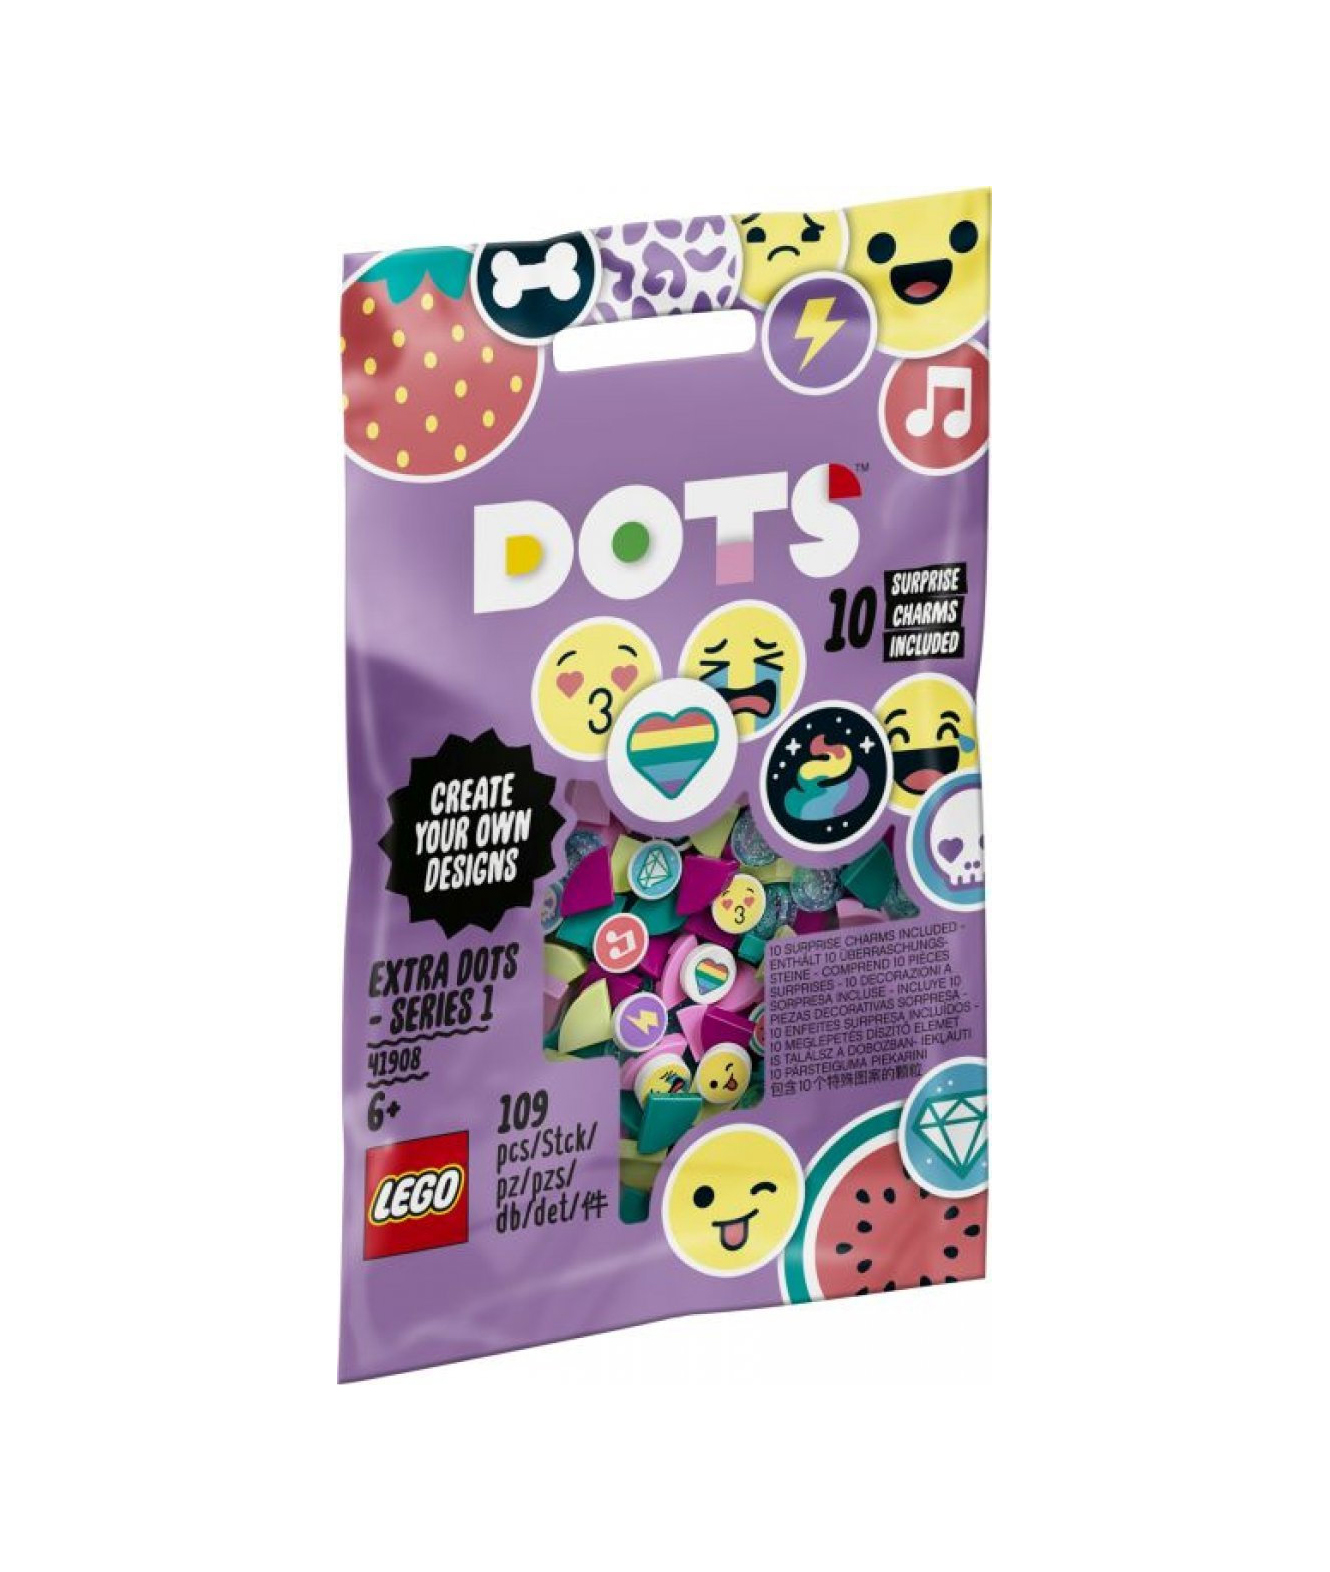 Lego Dots: Extra Dots Series 1 41908